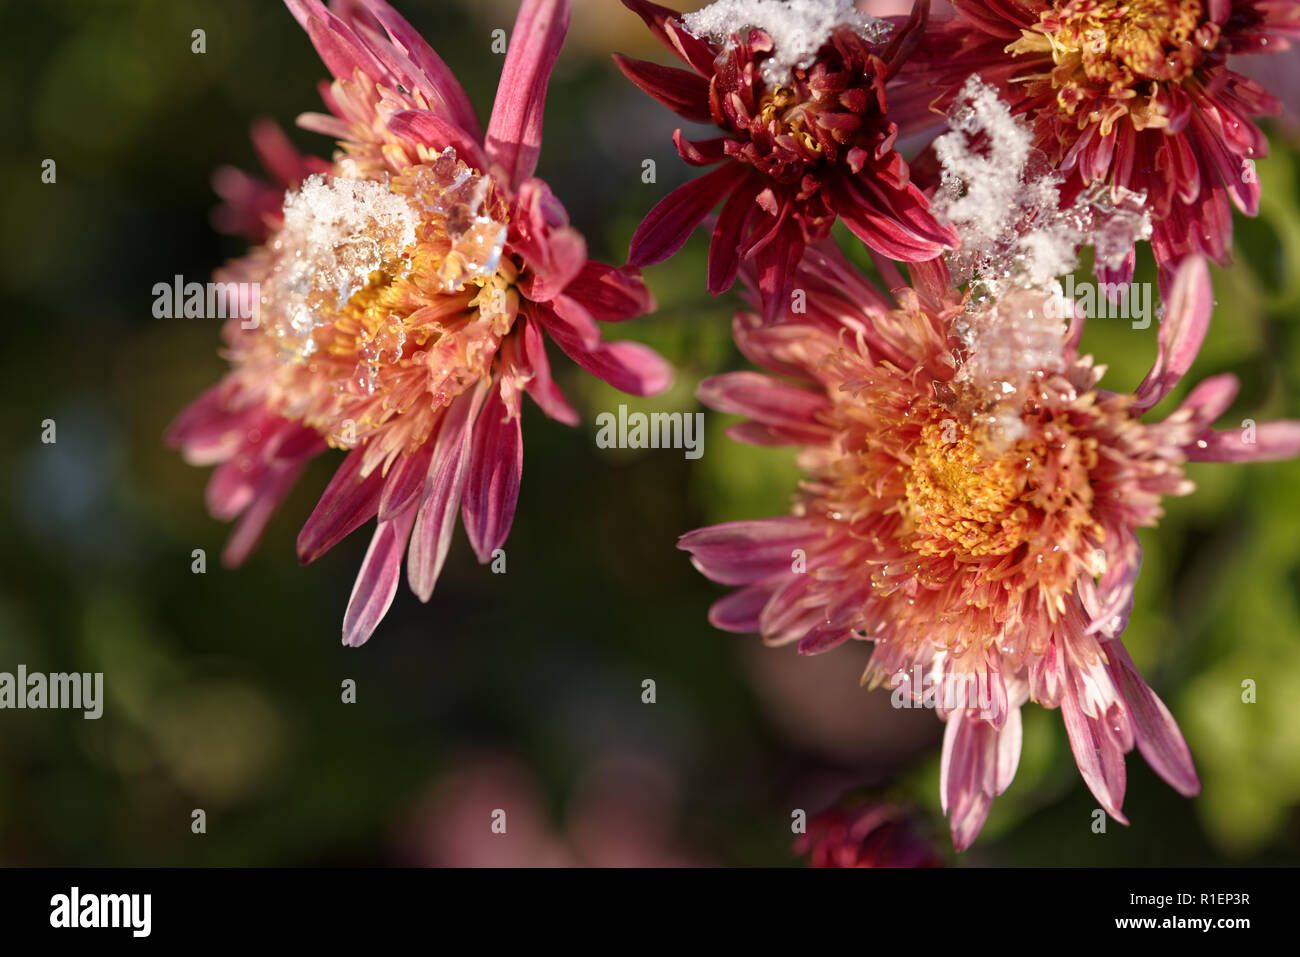 Chrysanthemum flowers under snow Stock Photo